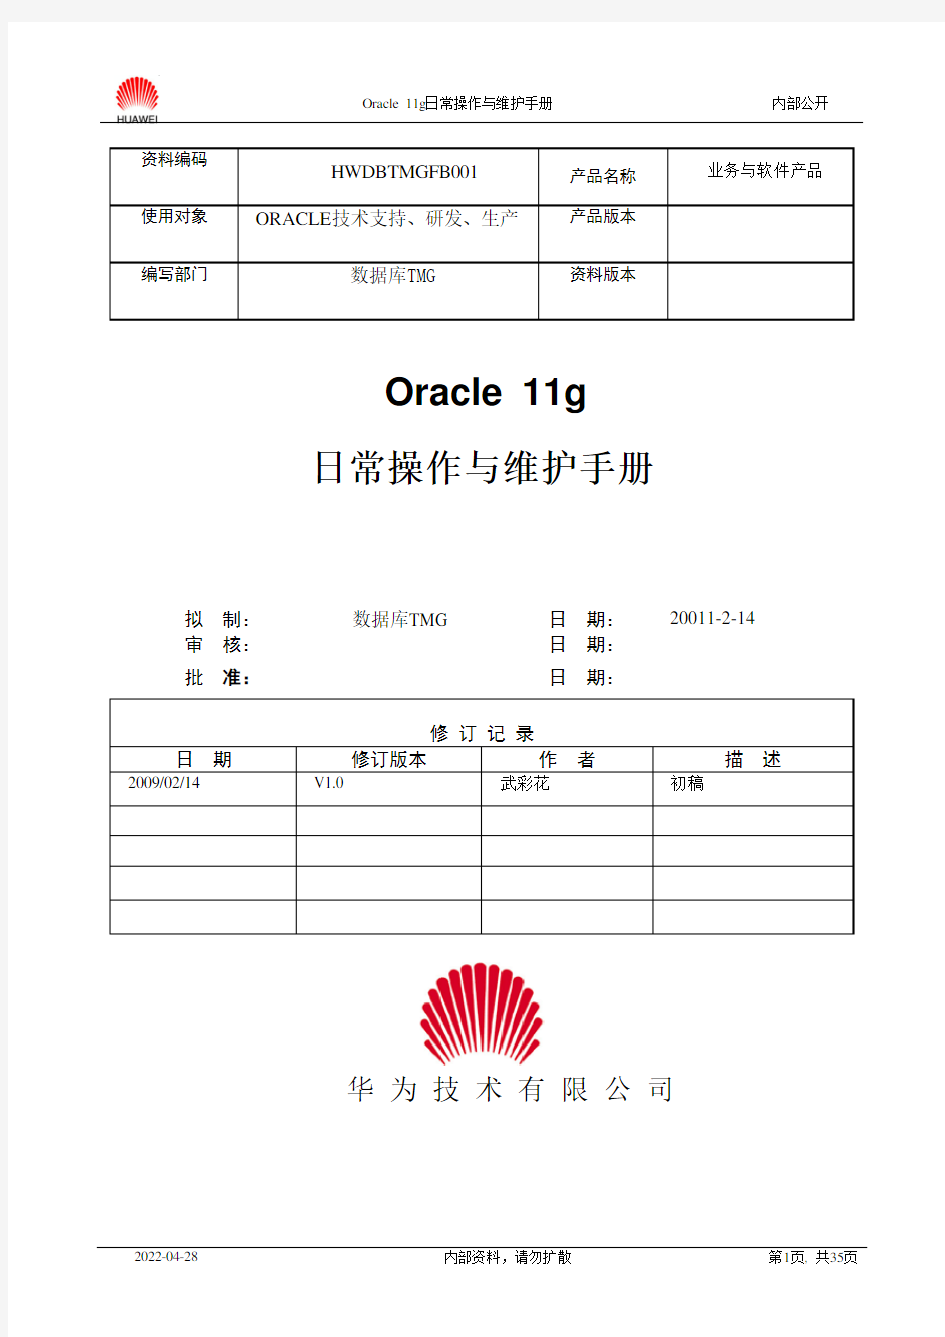 Oracle 11g日常操作与维护手册